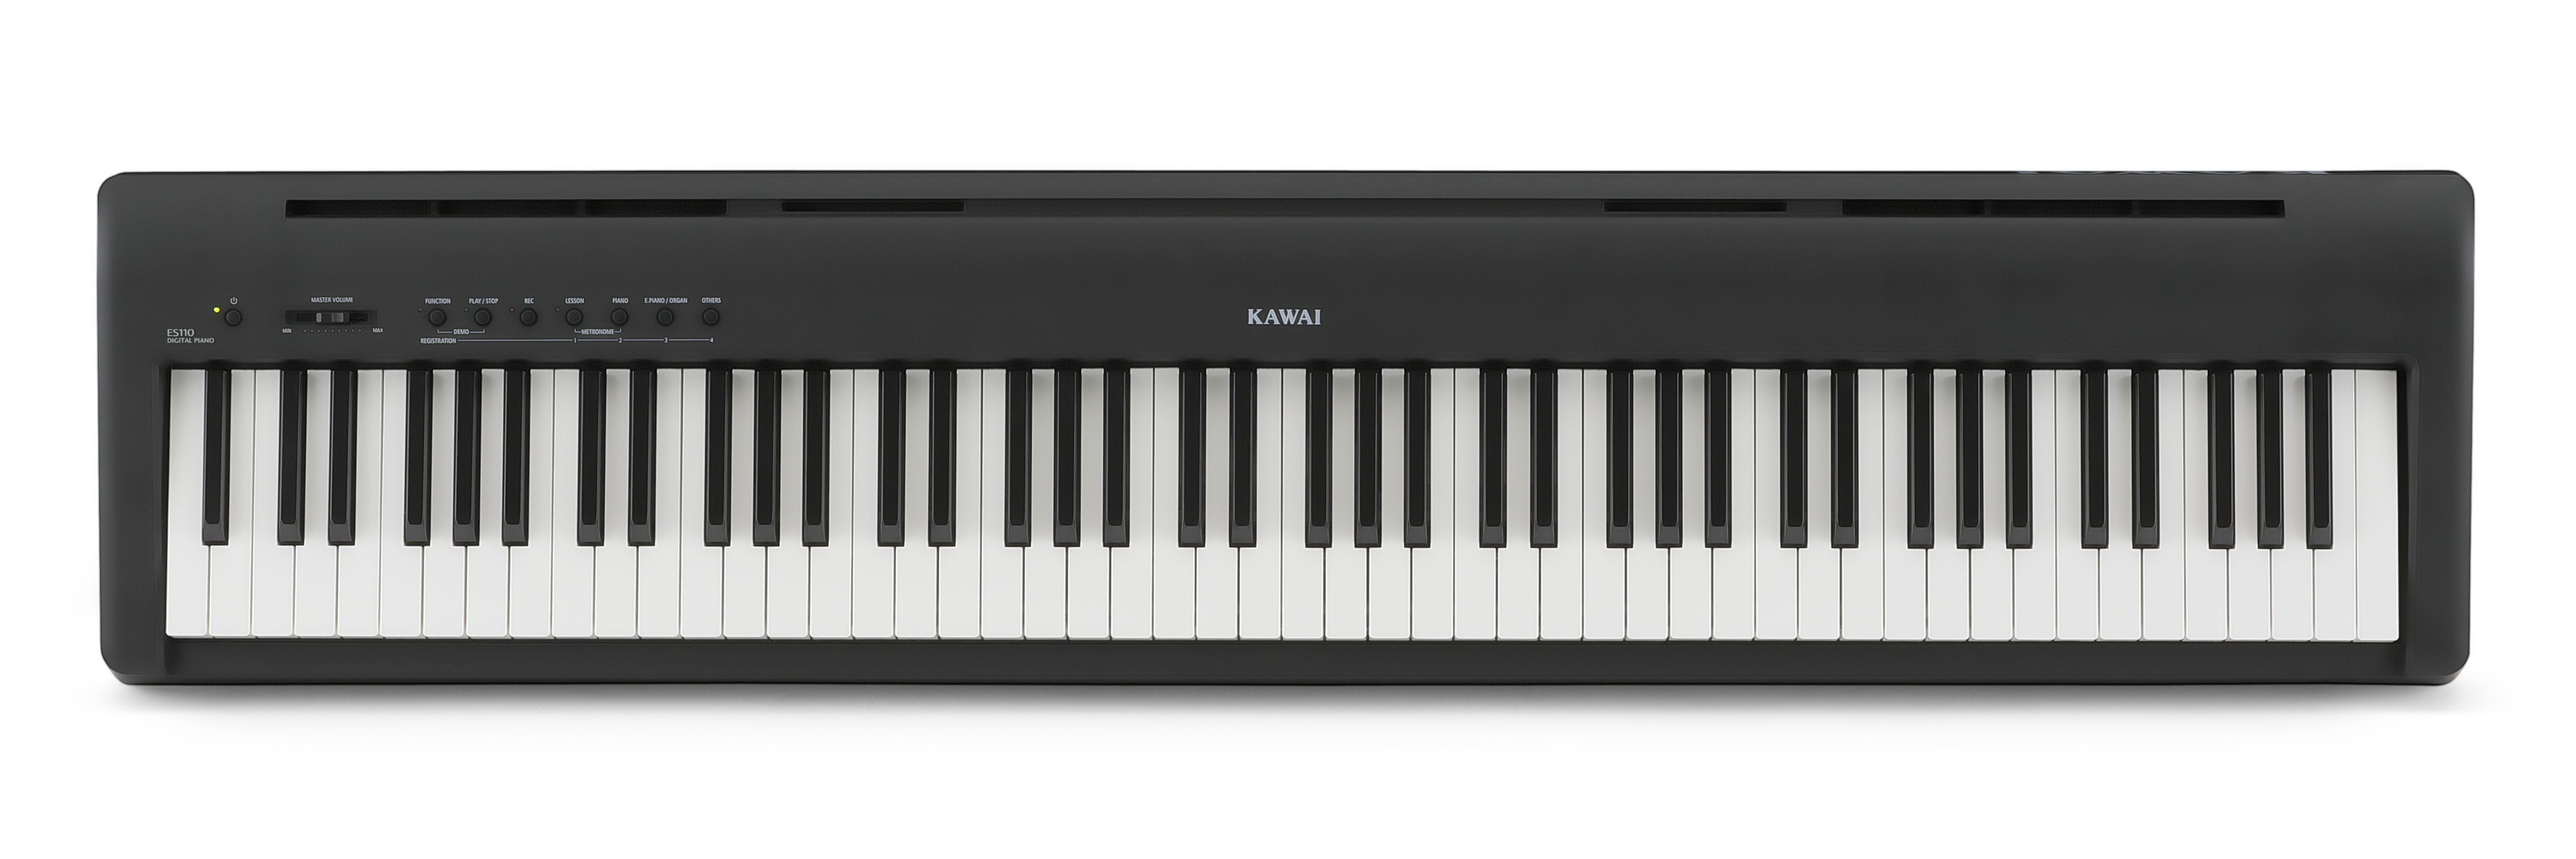 ES110B | $789 - Kawai Portable digital piano Black (ES-110B ...